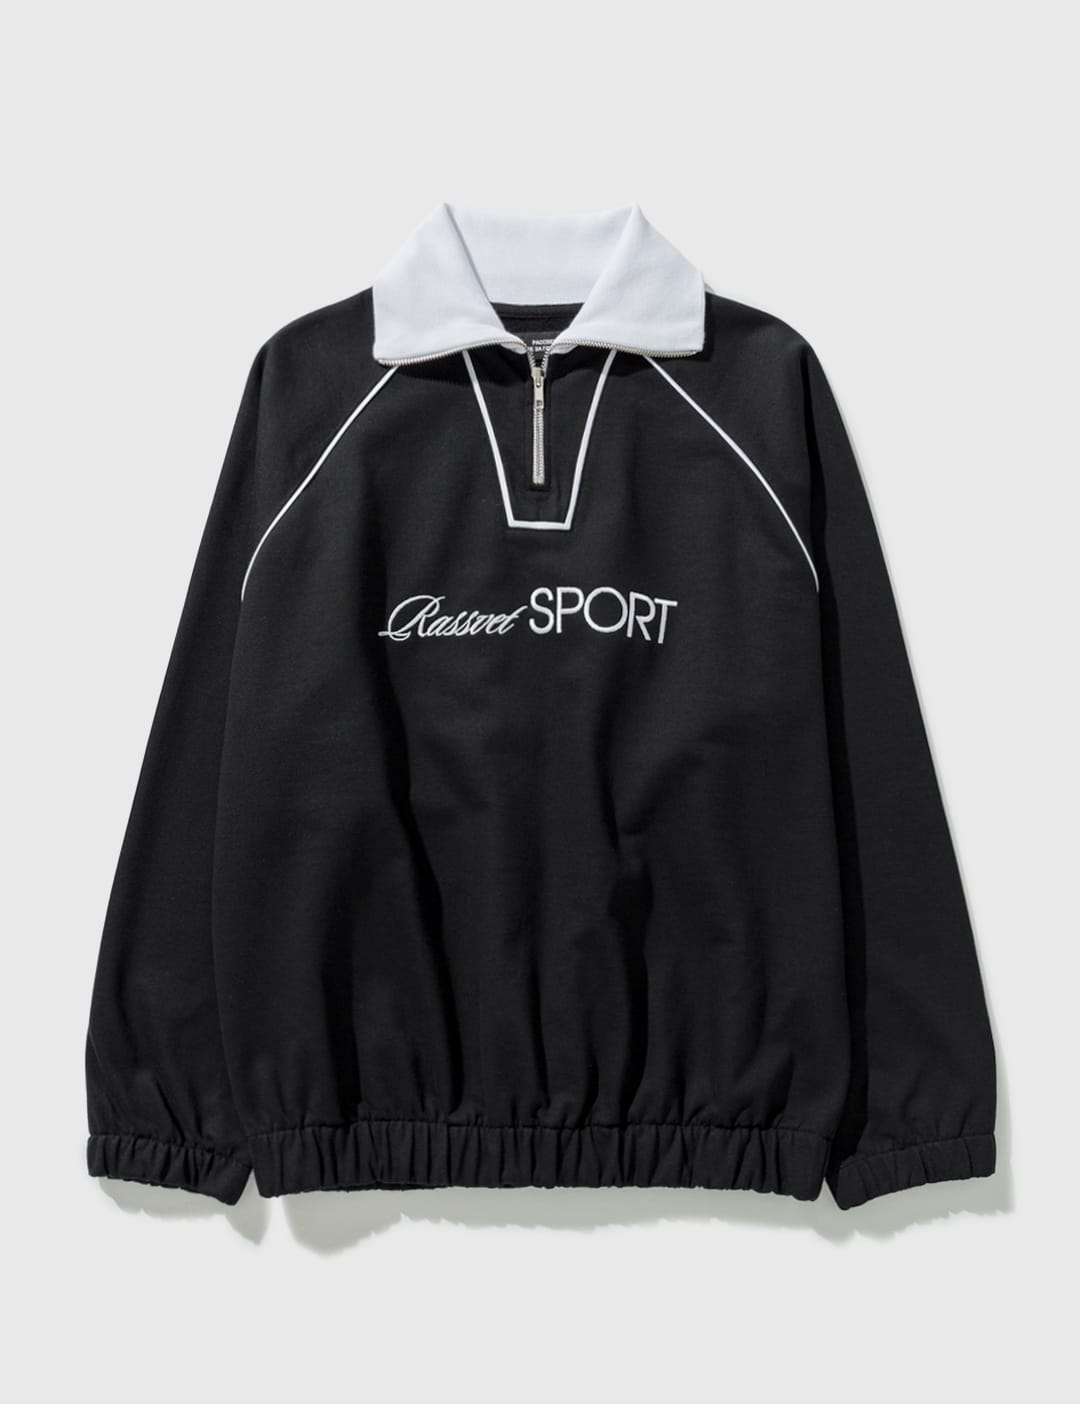 Rassvet - Rassvet Sport Collared Sweatshirt | HBX - Globally Curated  Fashion and Lifestyle by Hypebeast